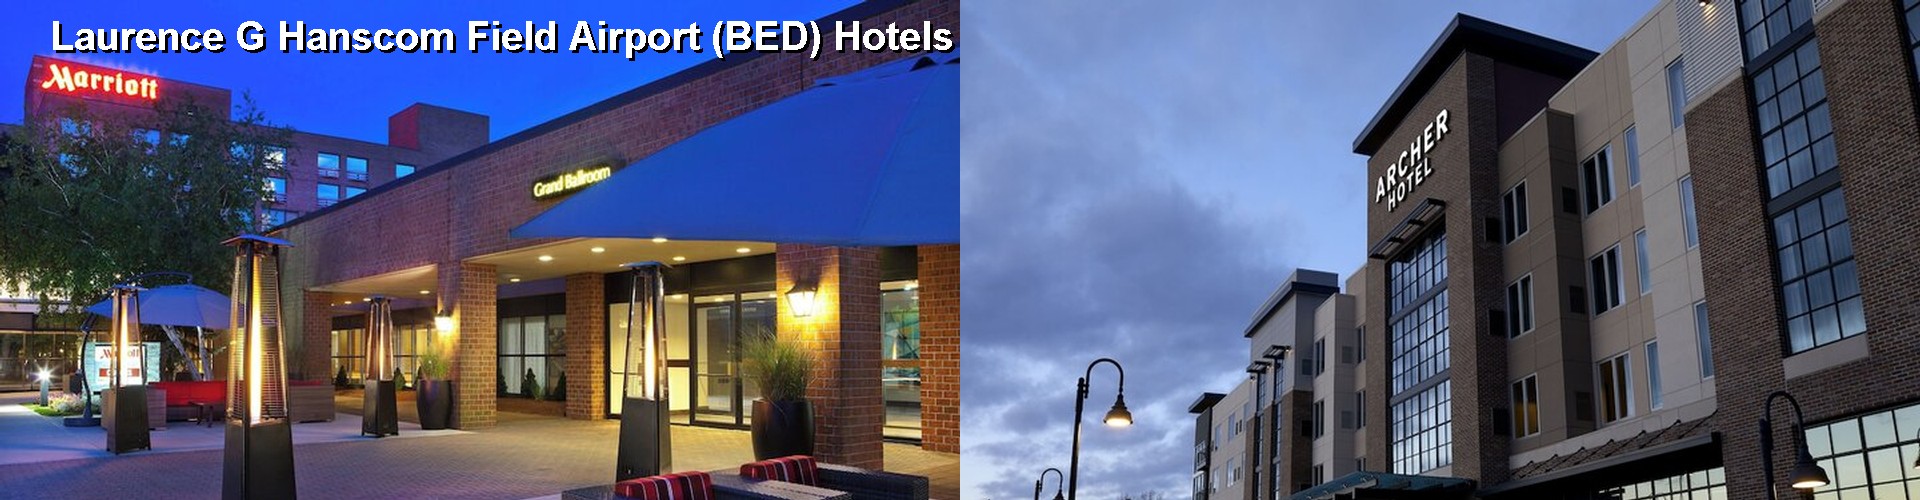 5 Best Hotels near Laurence G Hanscom Field Airport (BED)